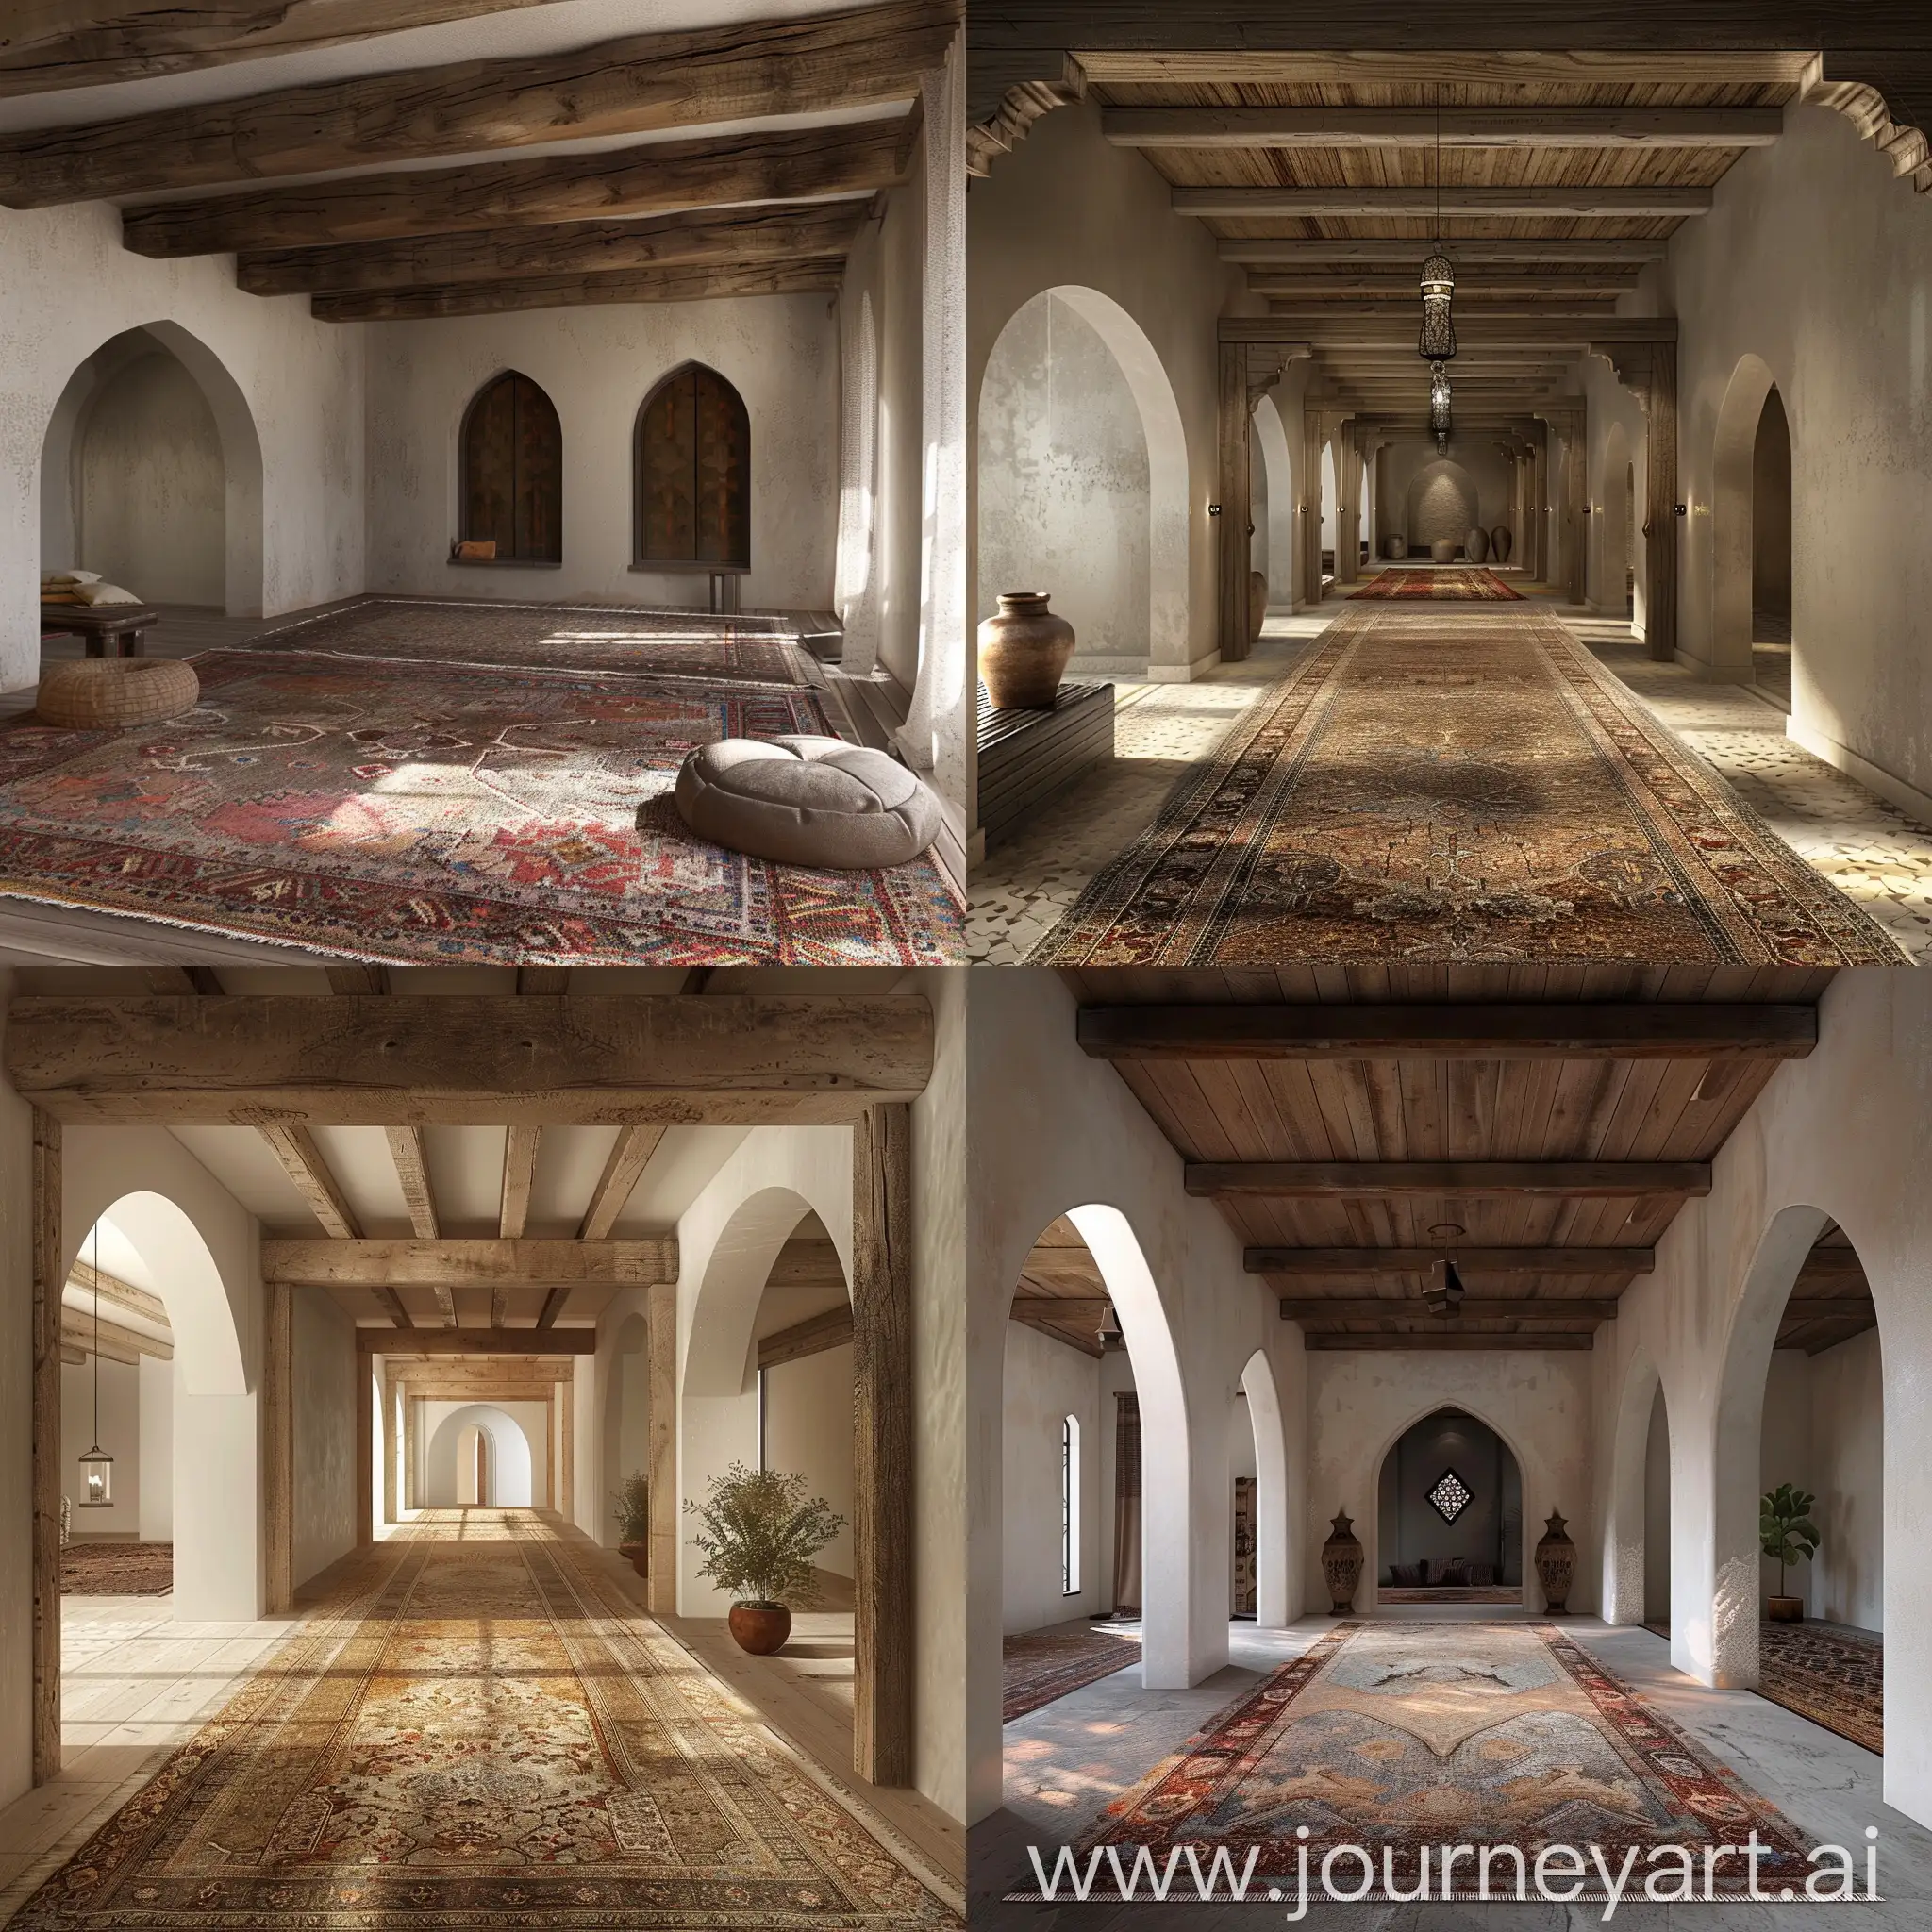 Contemporary-Interior-with-Rustic-Arabic-Influences